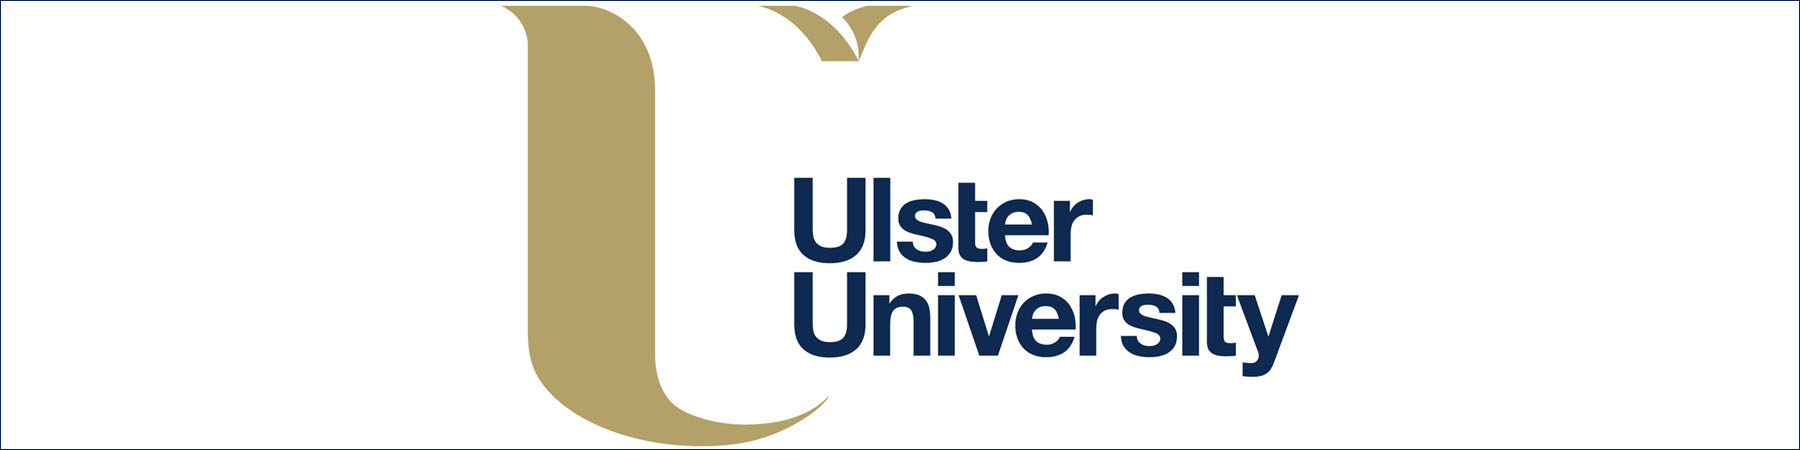 Pro Vice-Chancellor / Executive Dean at Ulster University